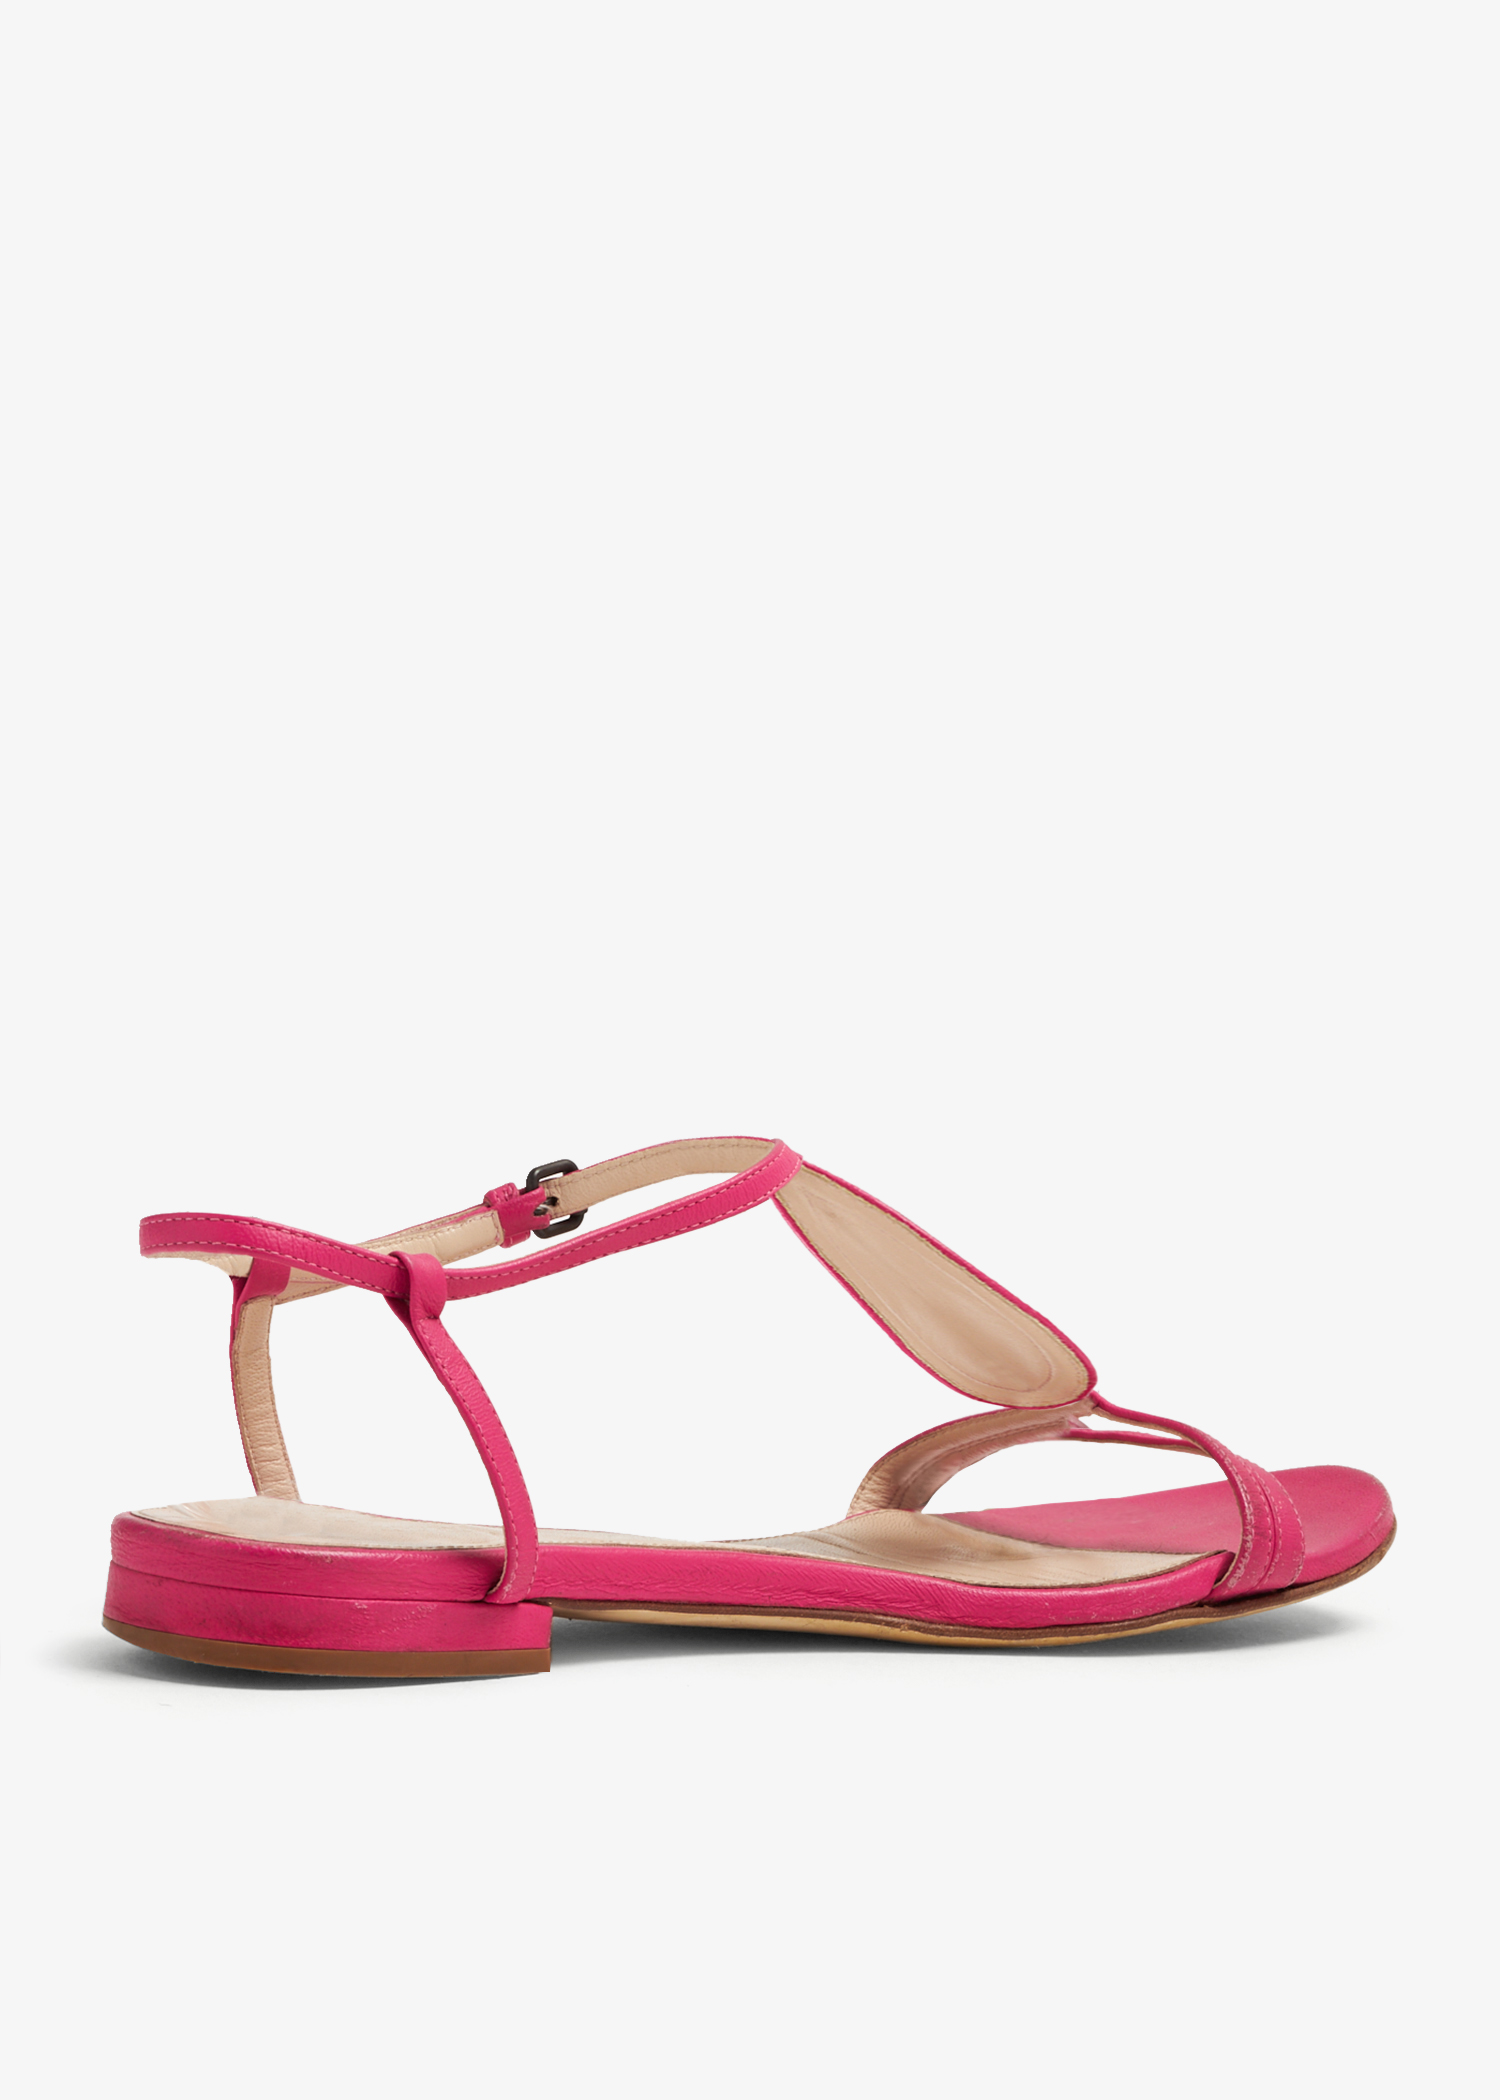 Women Shoes Slippers Sandals Flat Summer Open Toe Comfortable Platform  Strap | eBay